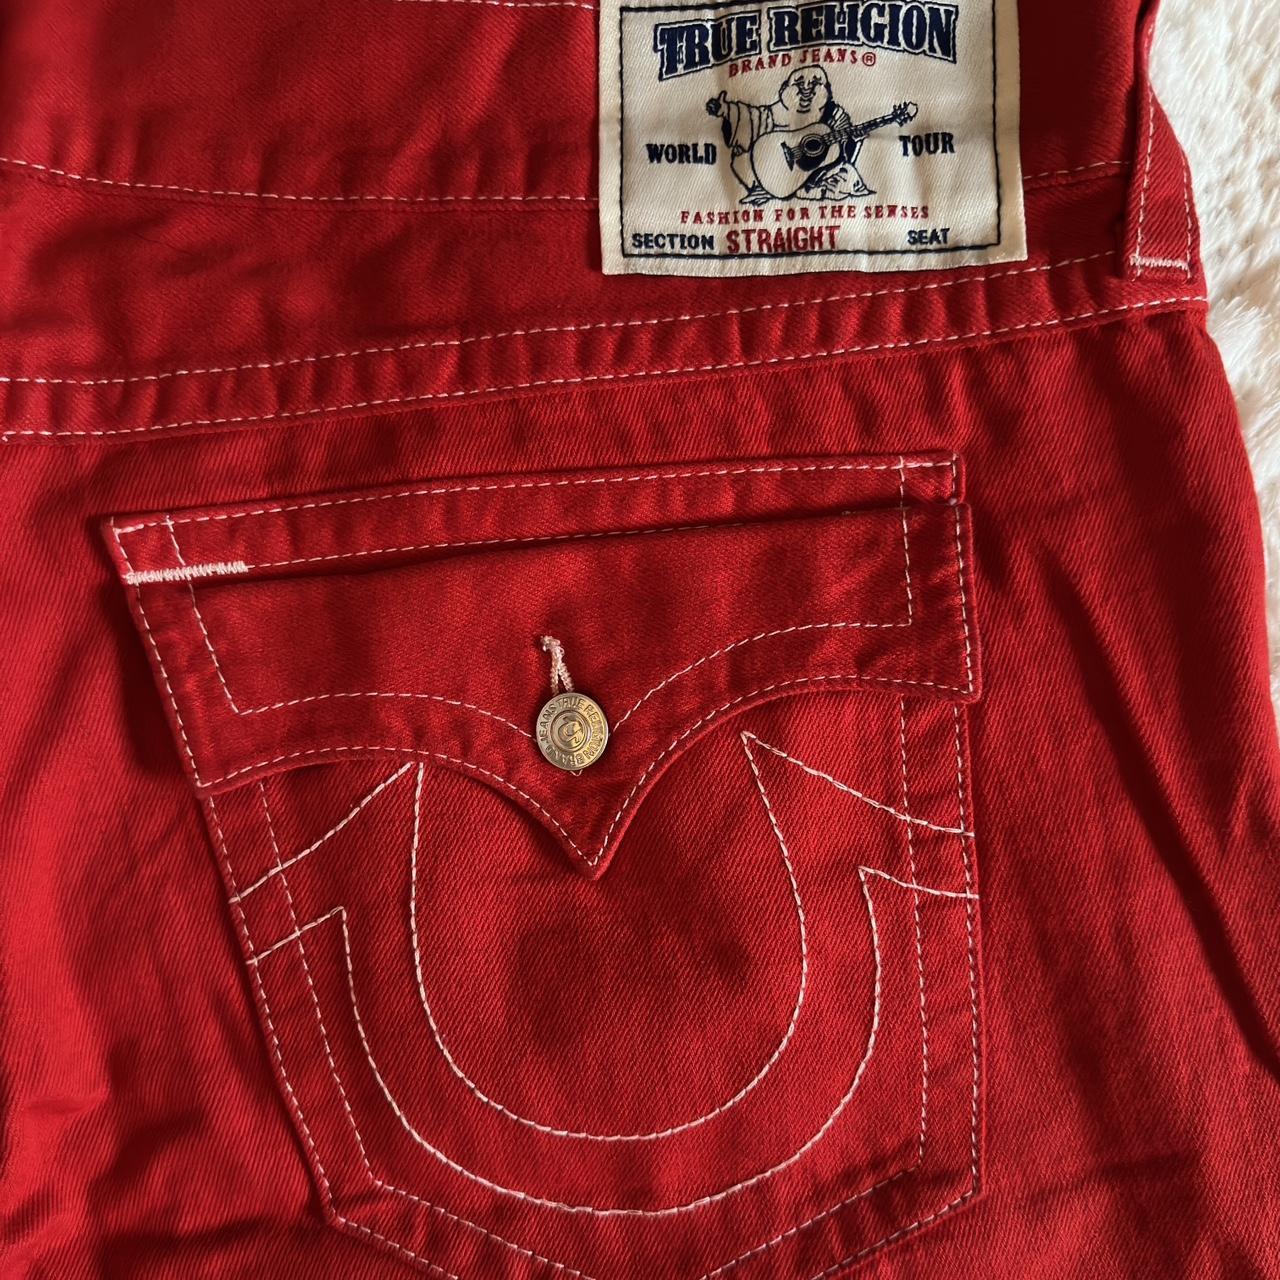 True Religion Men's Red Jeans | Depop